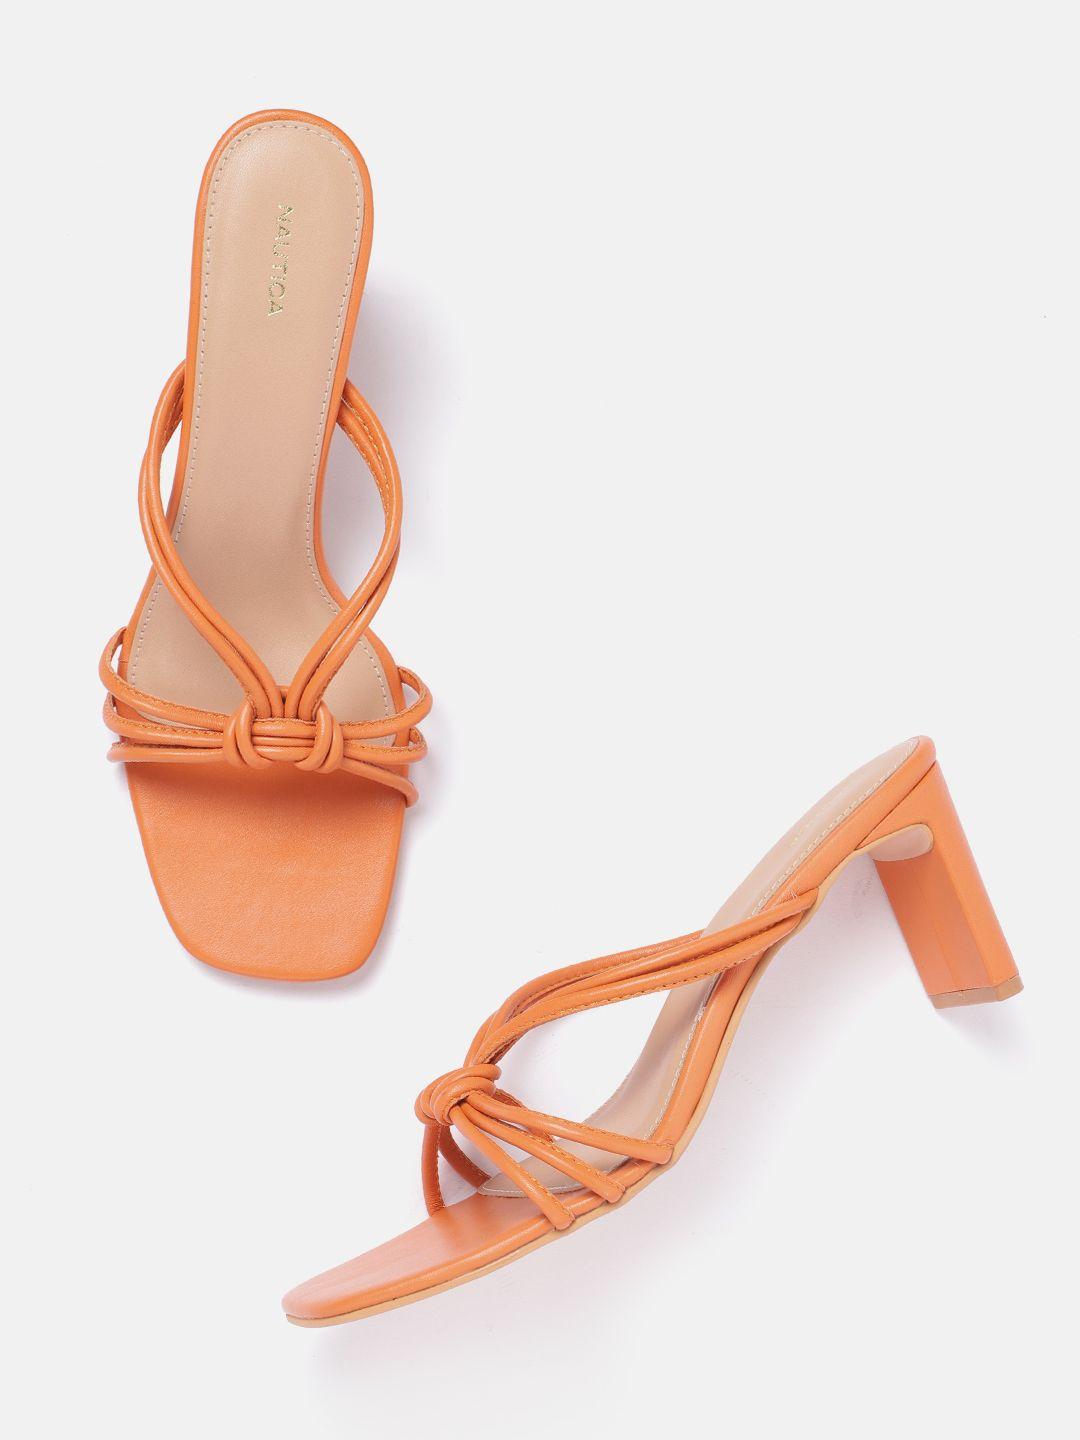 nautica strappy knot detail block heels